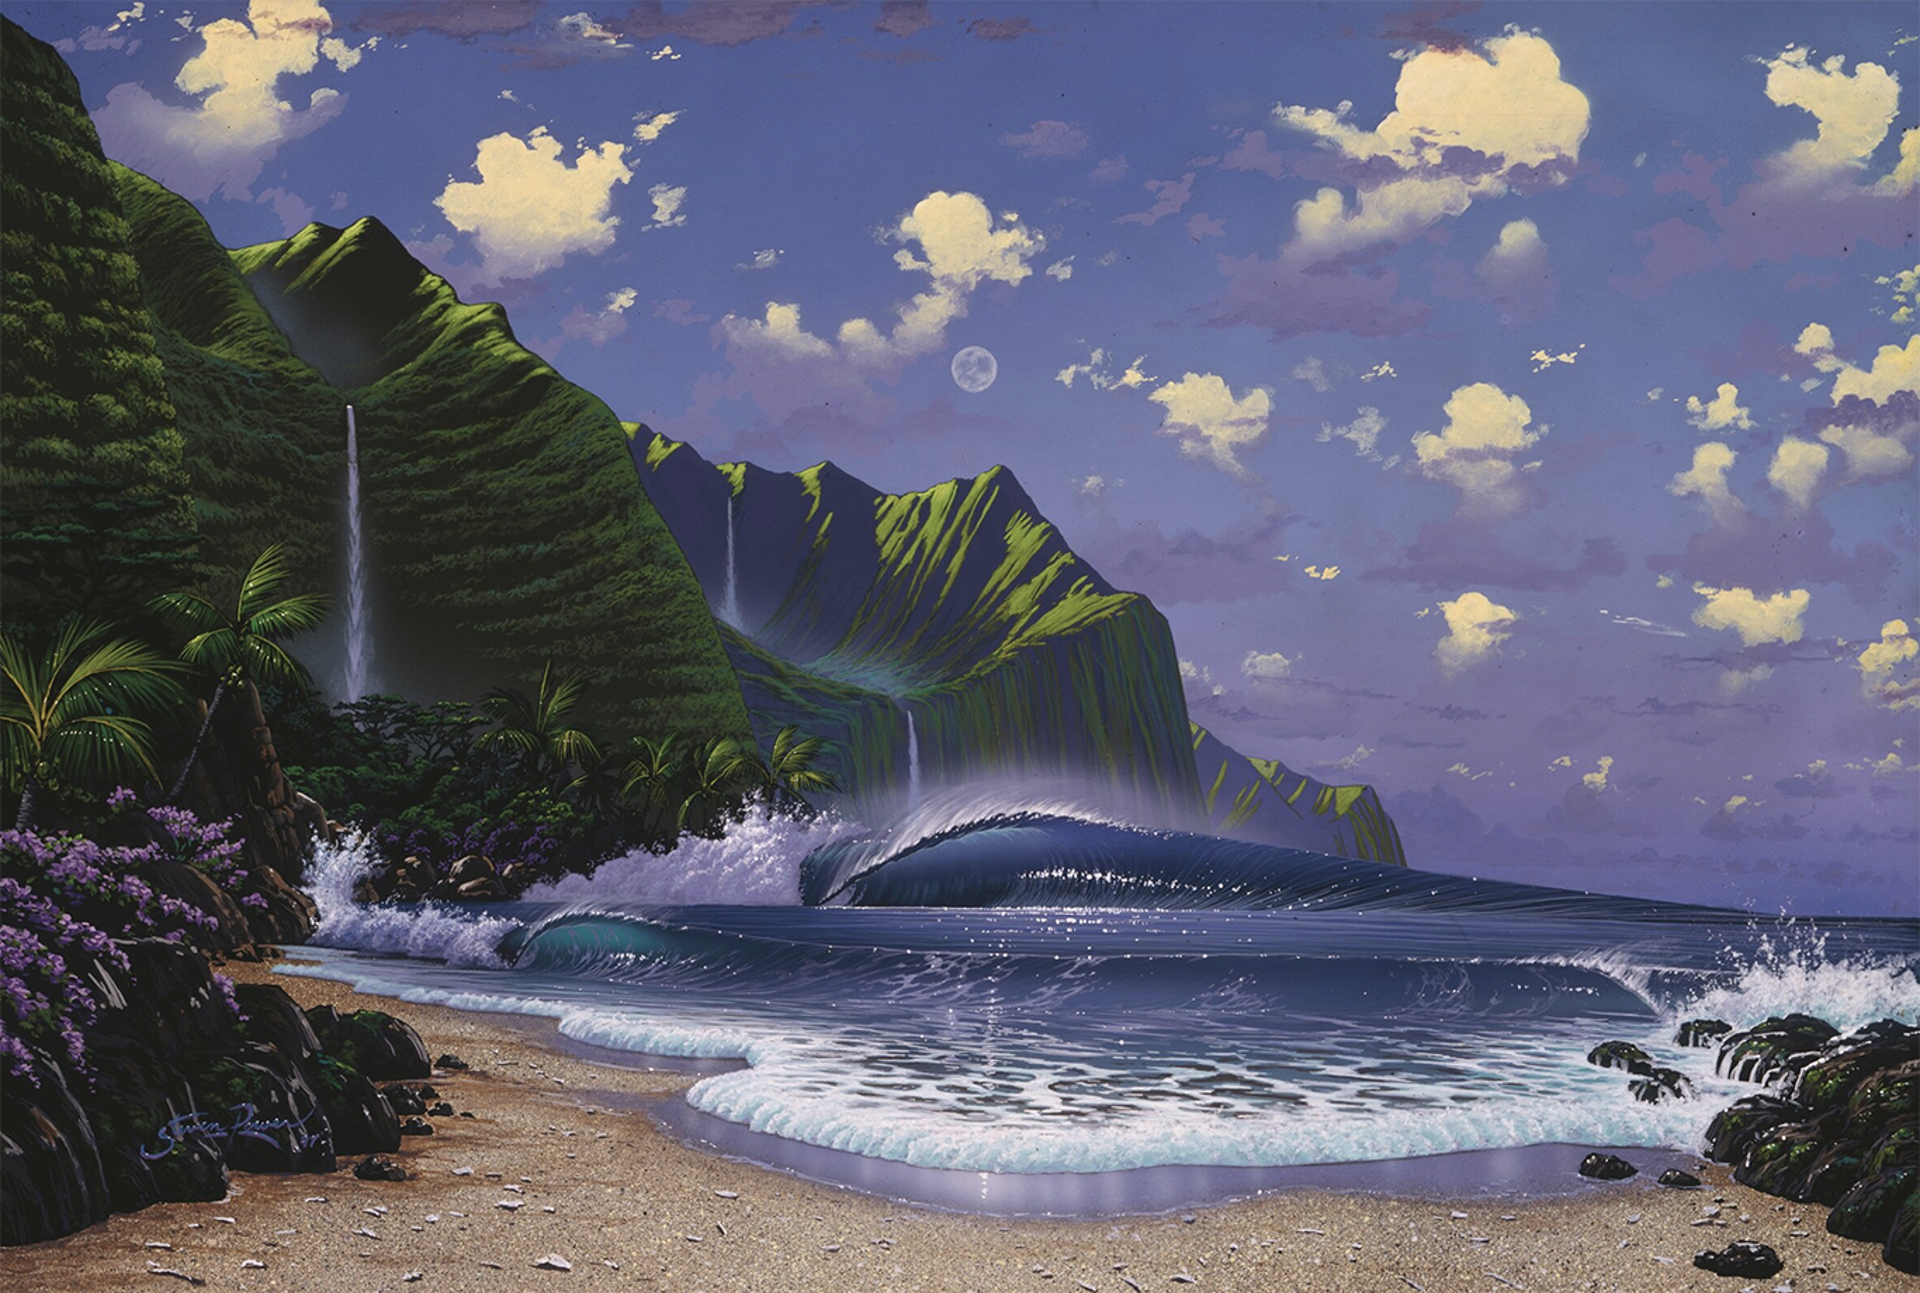 Kauaʻi Dream by Steven Power